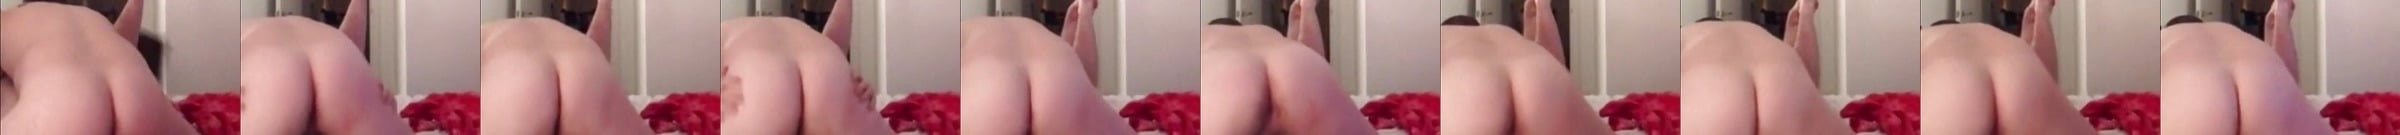 Good Cum Shot From 60 Year Old Bi Curious Guy Gay Porn D3